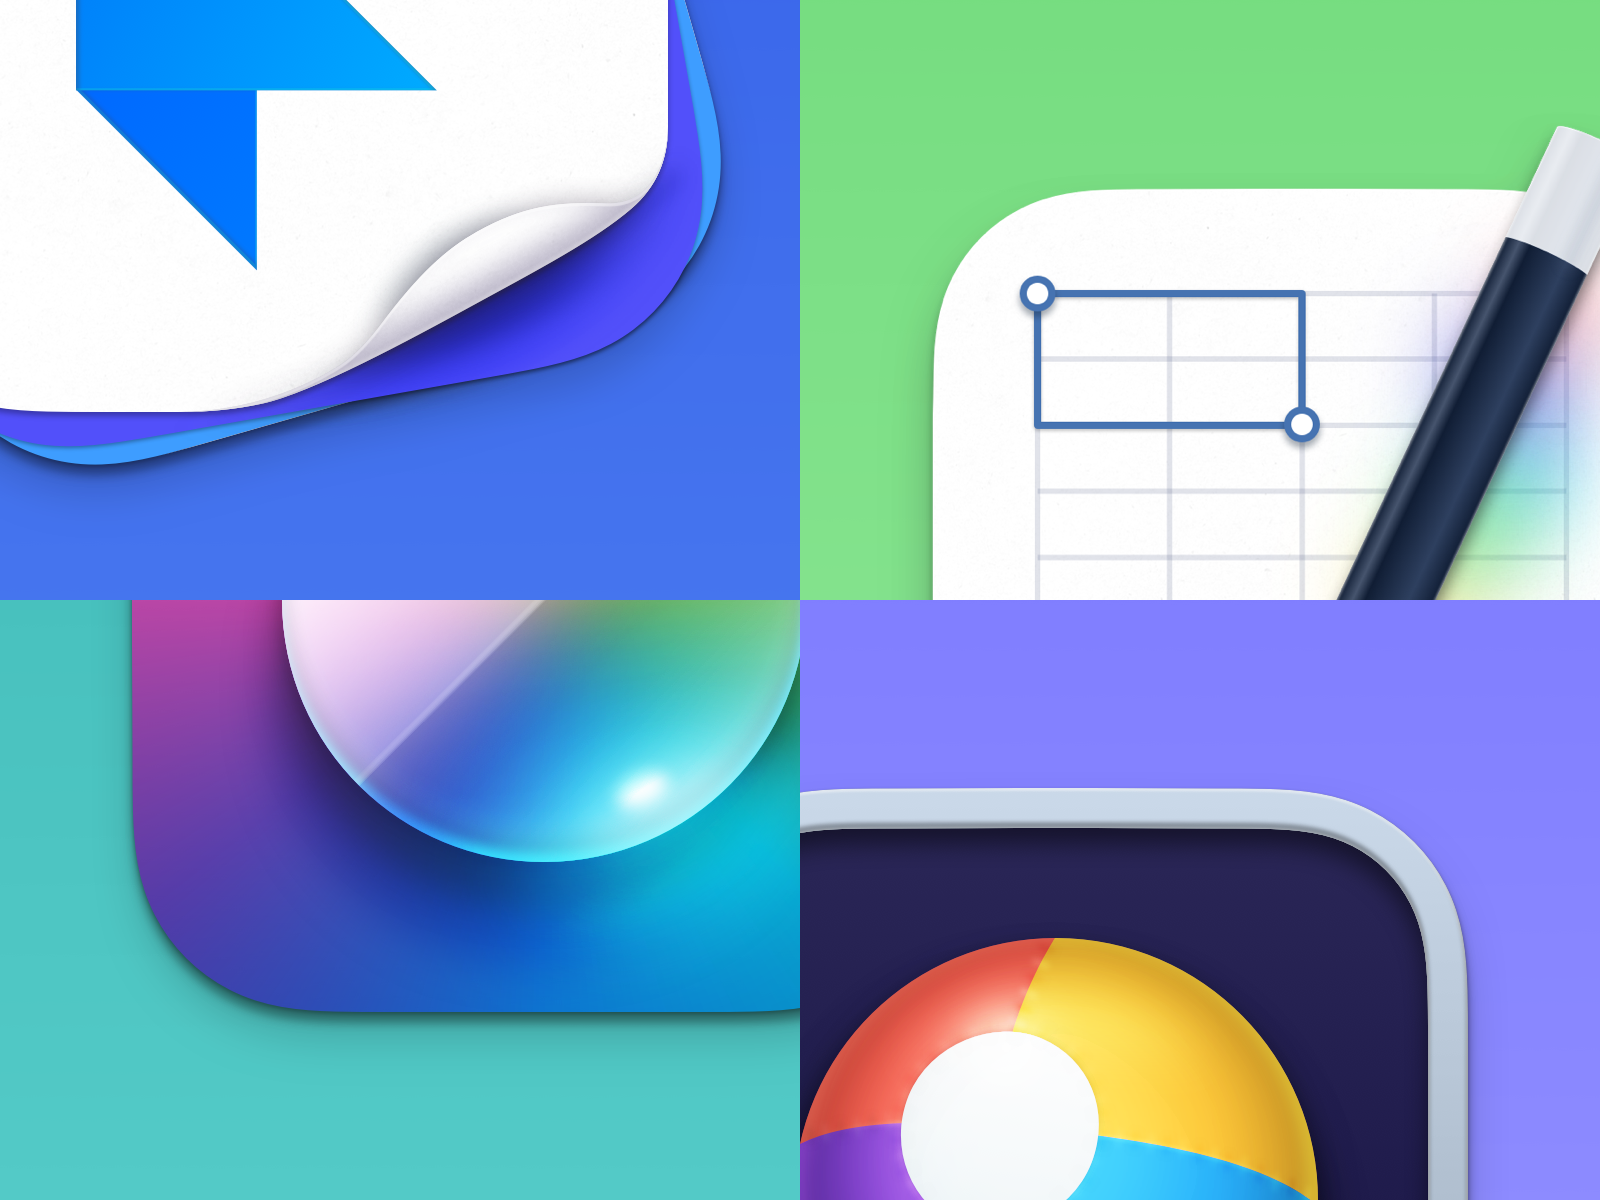 mac big sur folder icons